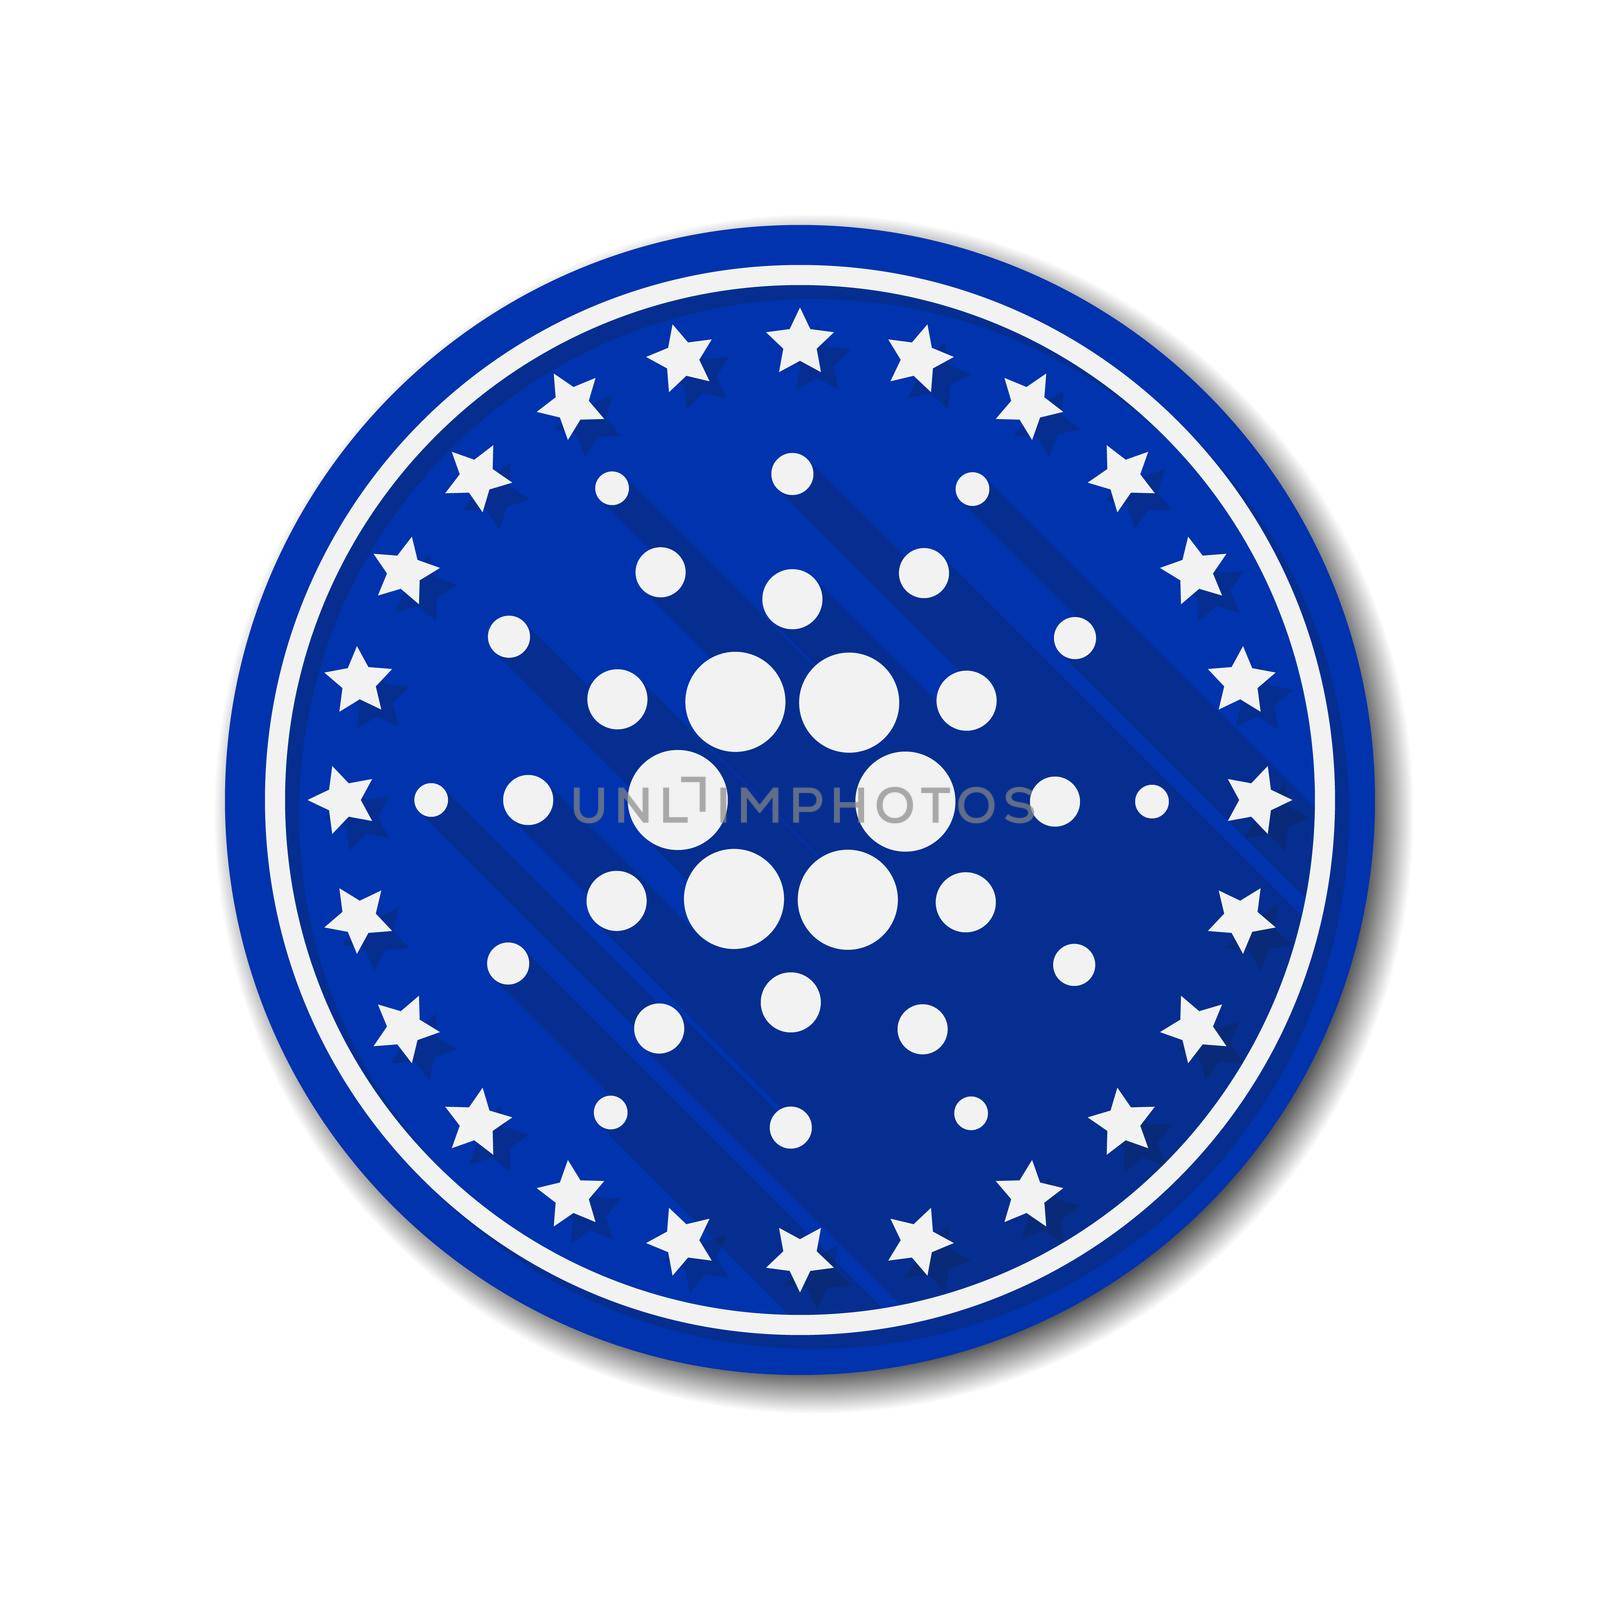 Cardano coin. Crypto currency blockchain coin Cardano ADA symbol vector illustration by Yuriy_Vlasenko